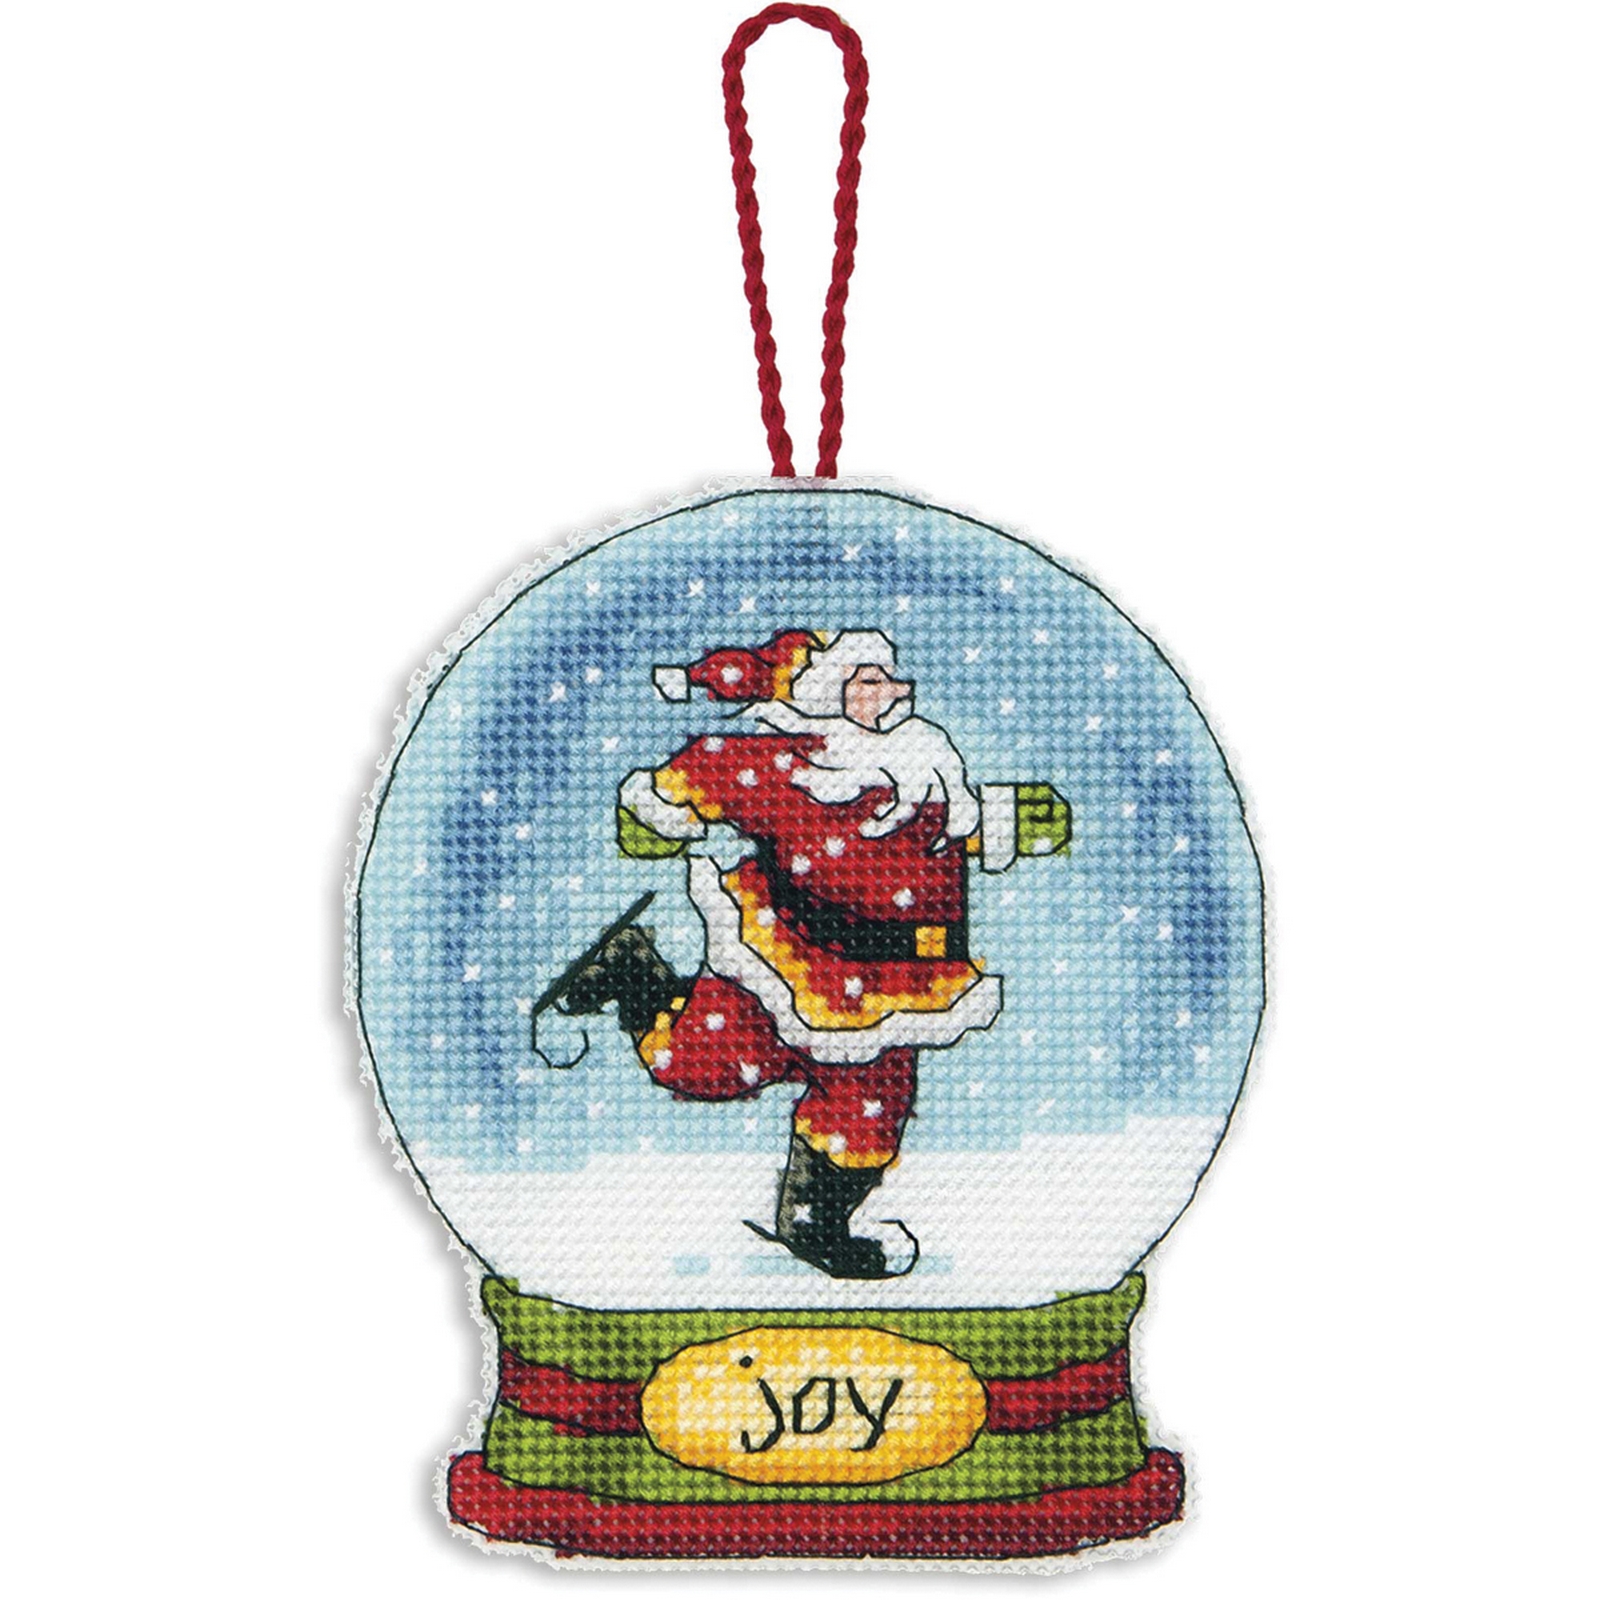 Joy Snowglobe Counted Cross Stitch Kit-3-3/4"X4-1/2" 14 Count Clear Plastic